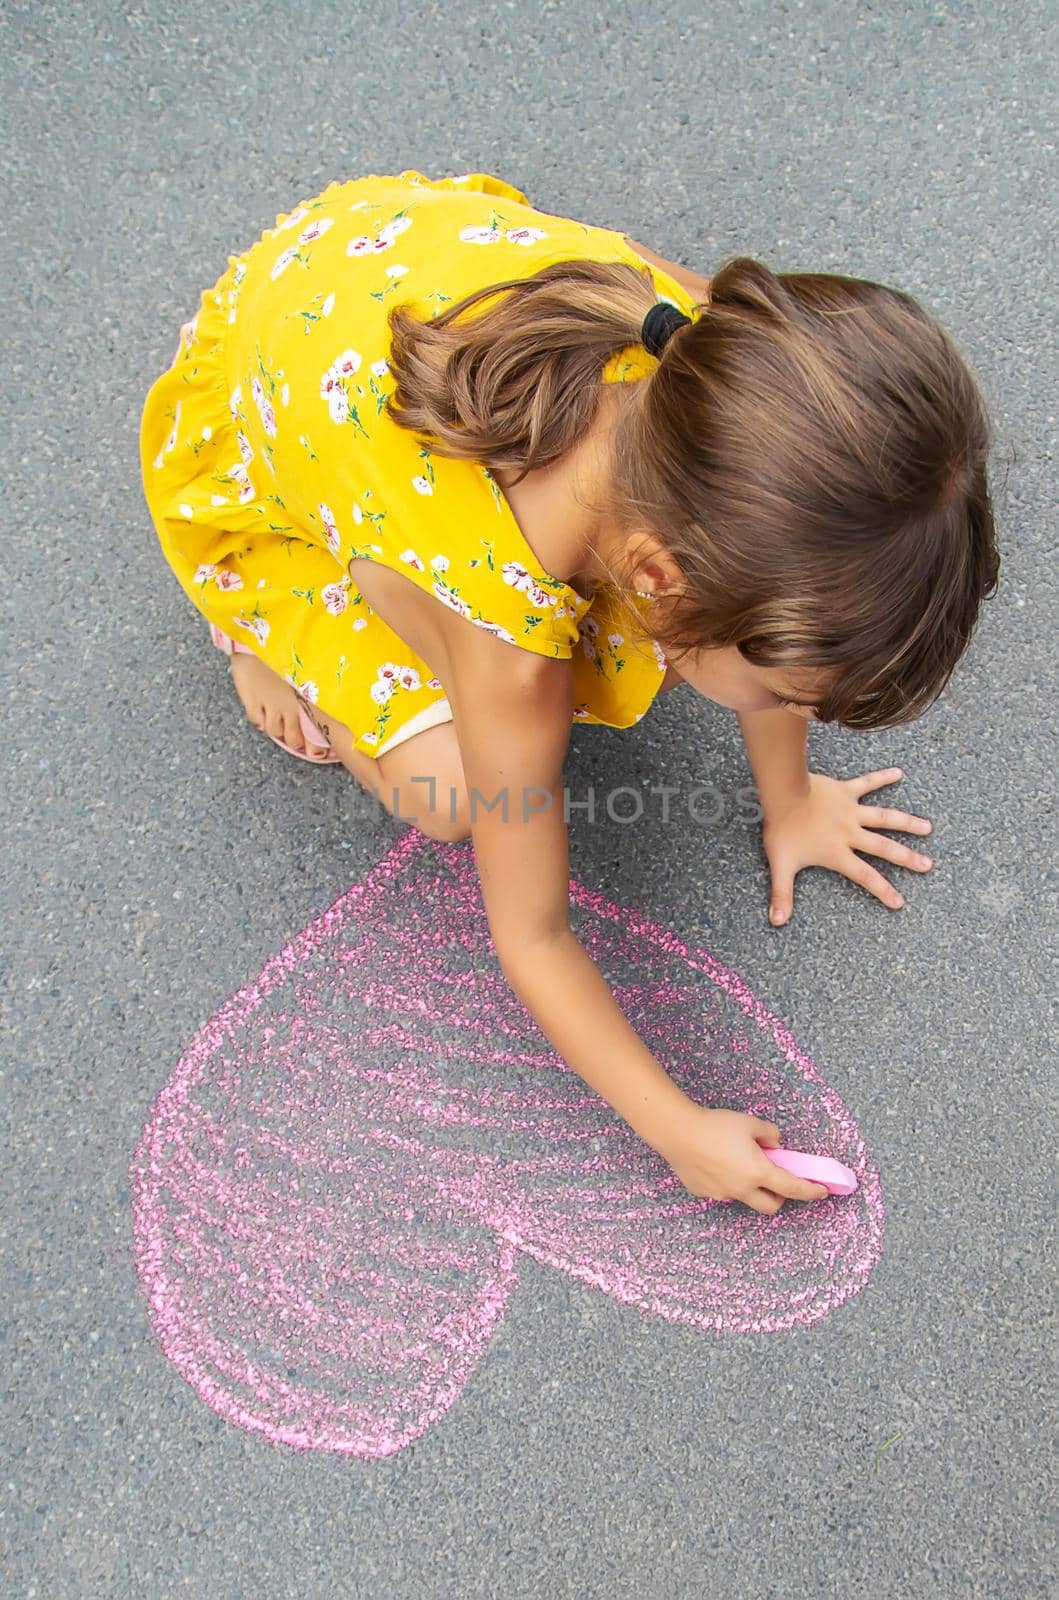 The child draws a heart on the asphalt with chalk. Selective focus. Kid.